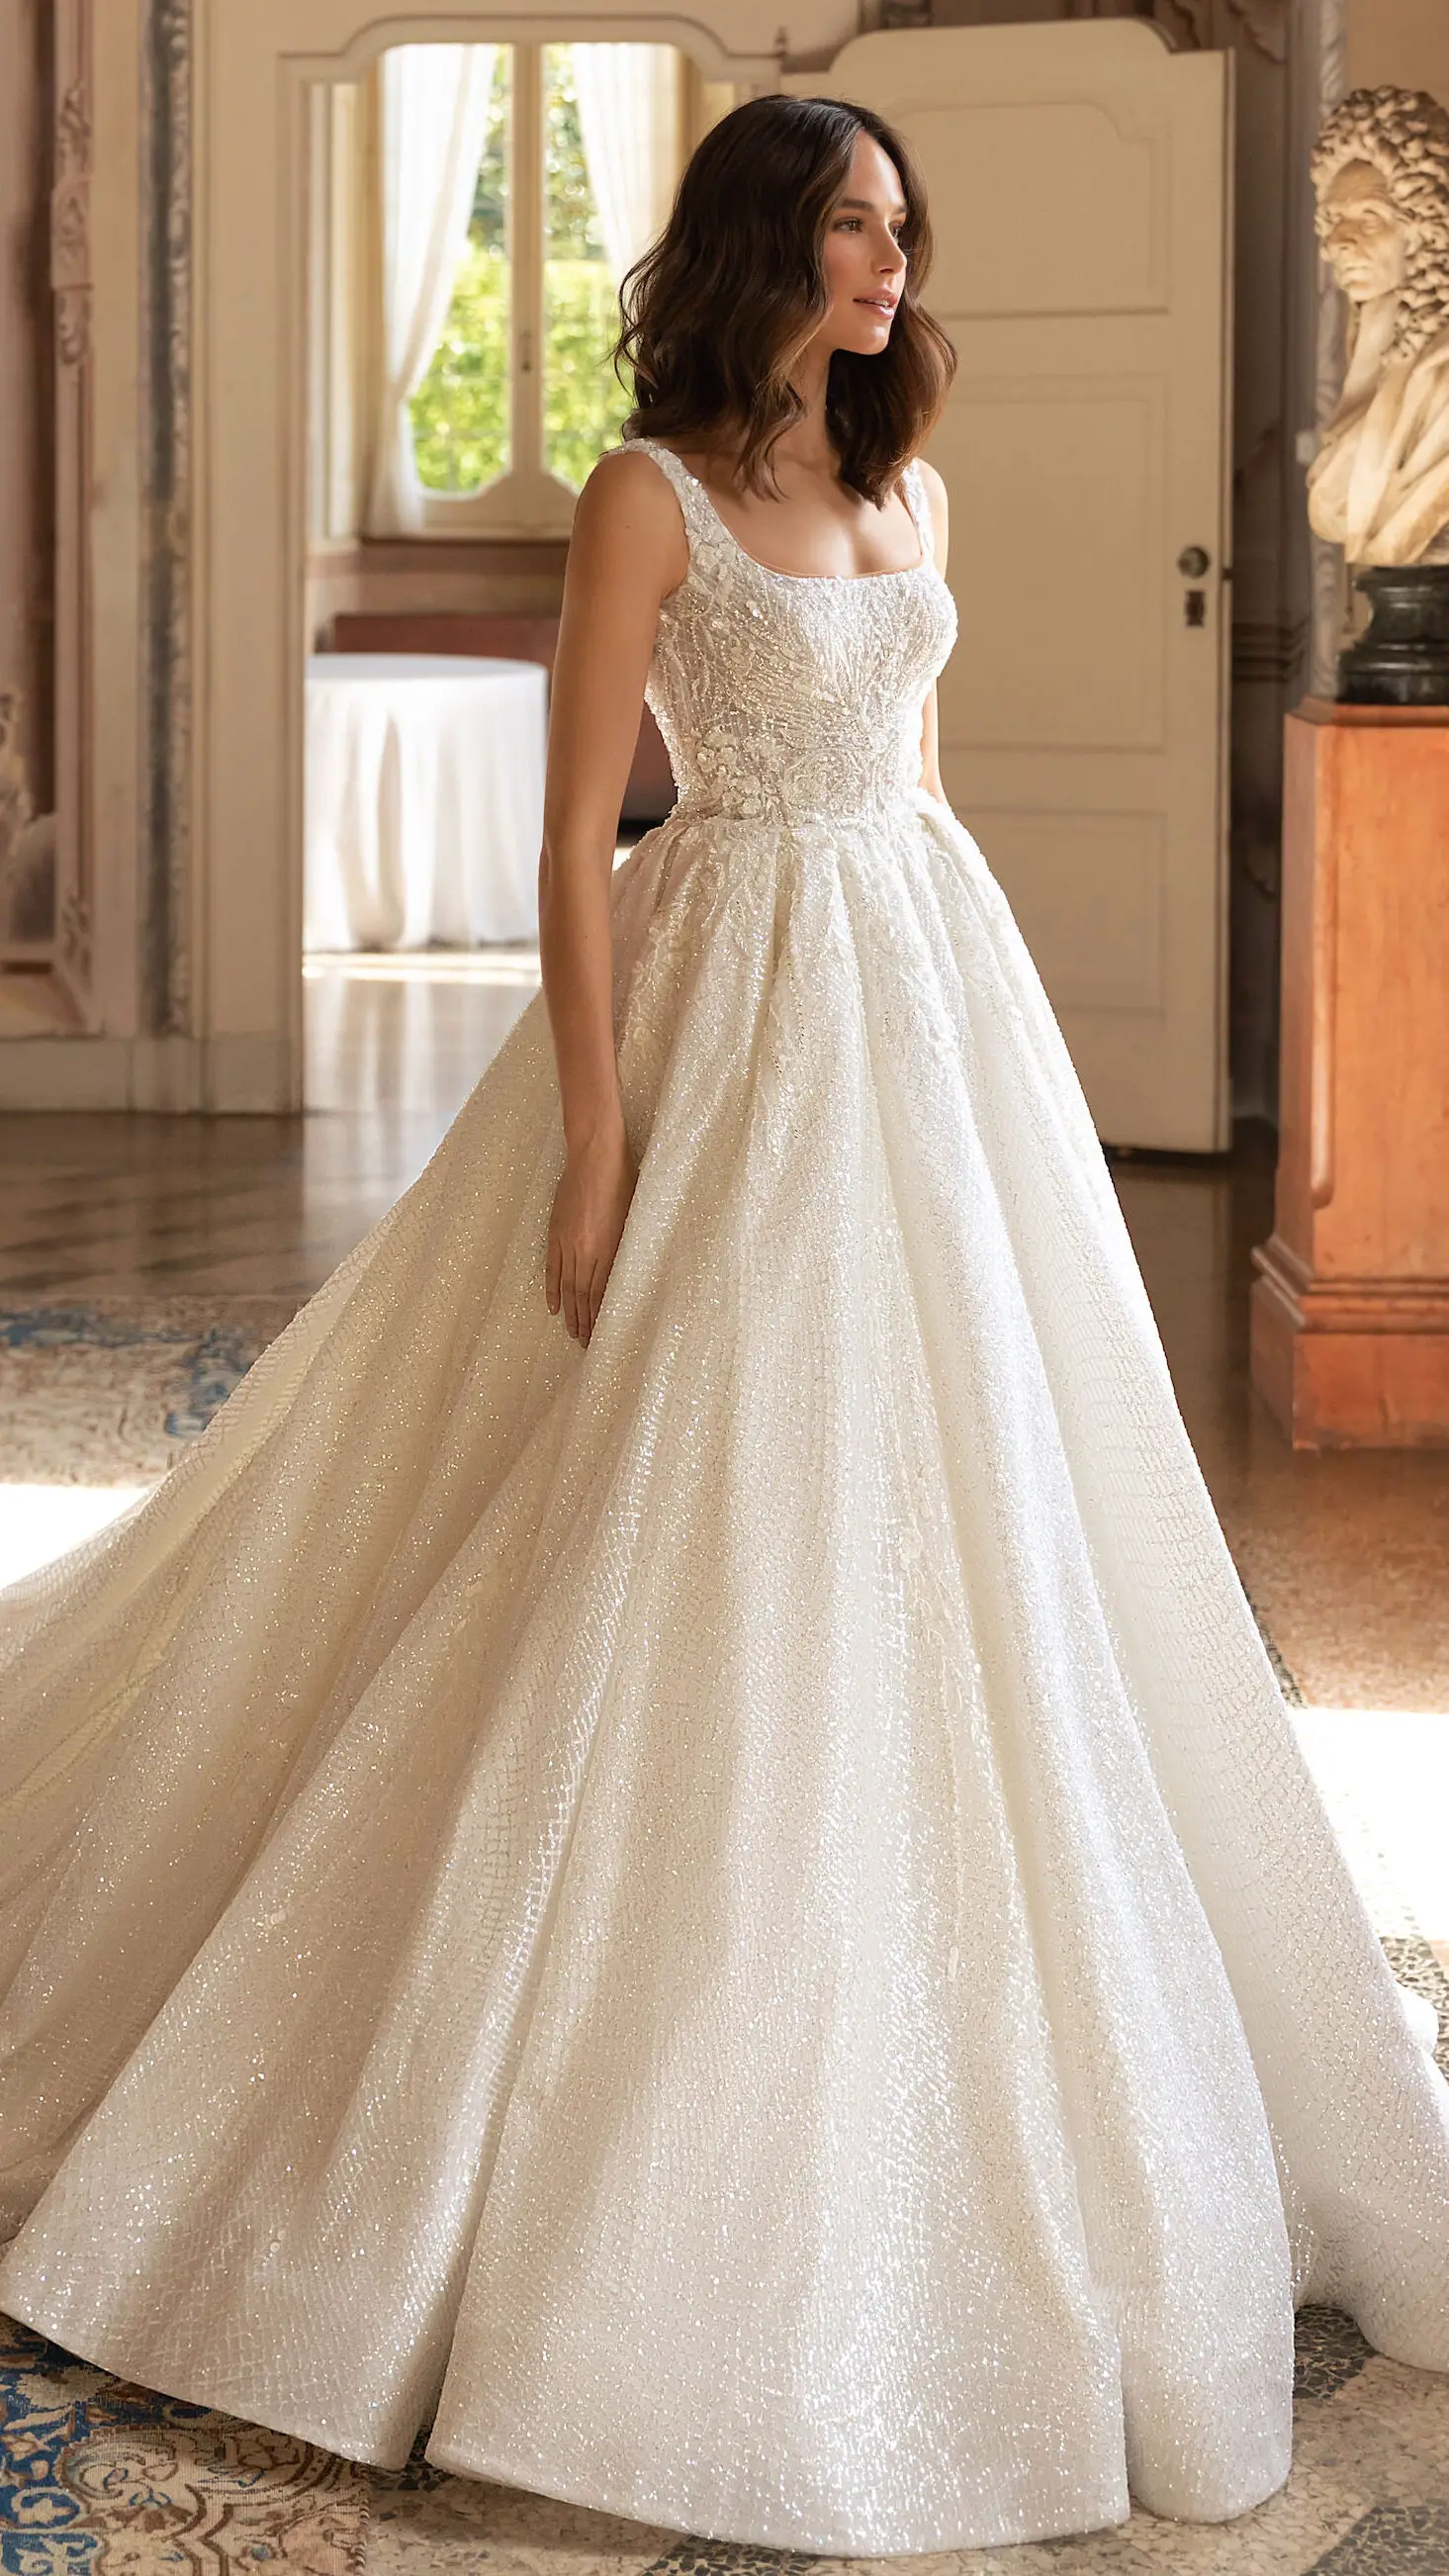 Sparkly elegant ball gown wedding dresses - Rossella